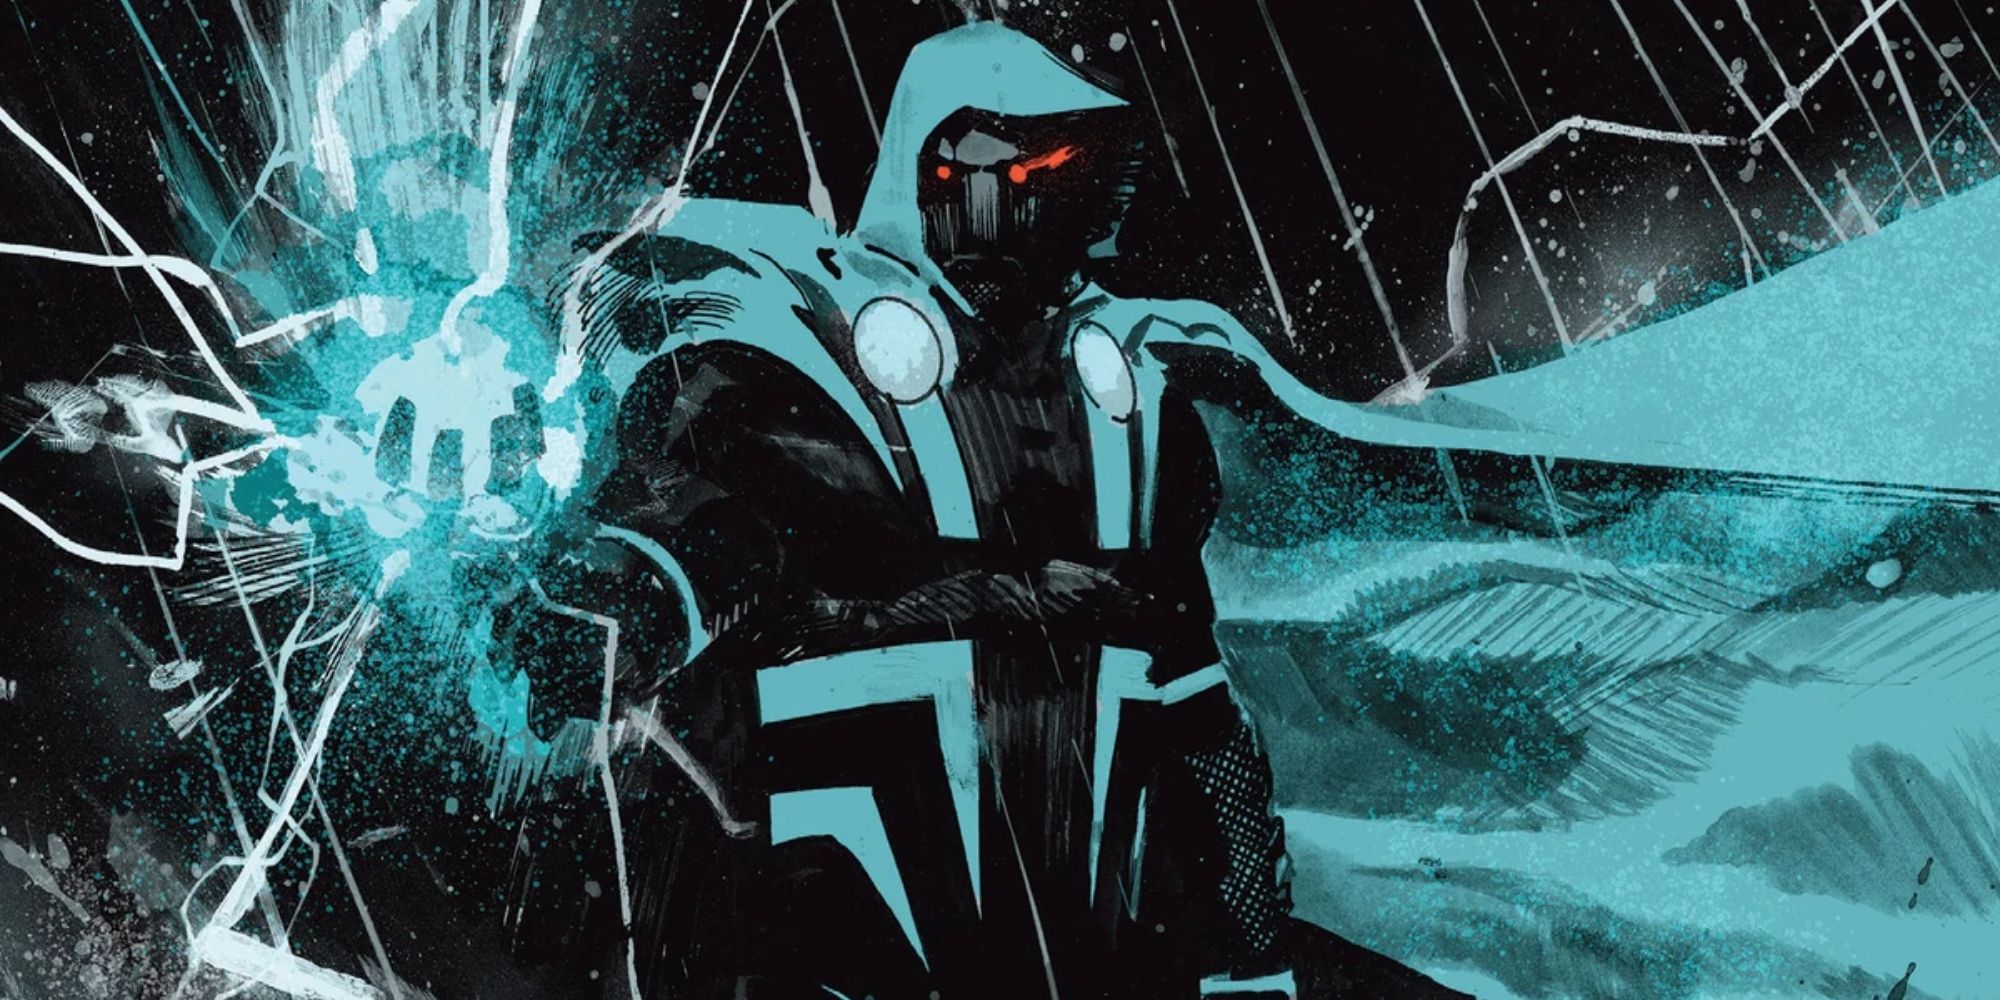 Doctor Doom from Earth-2099 summoning lightning in the rain